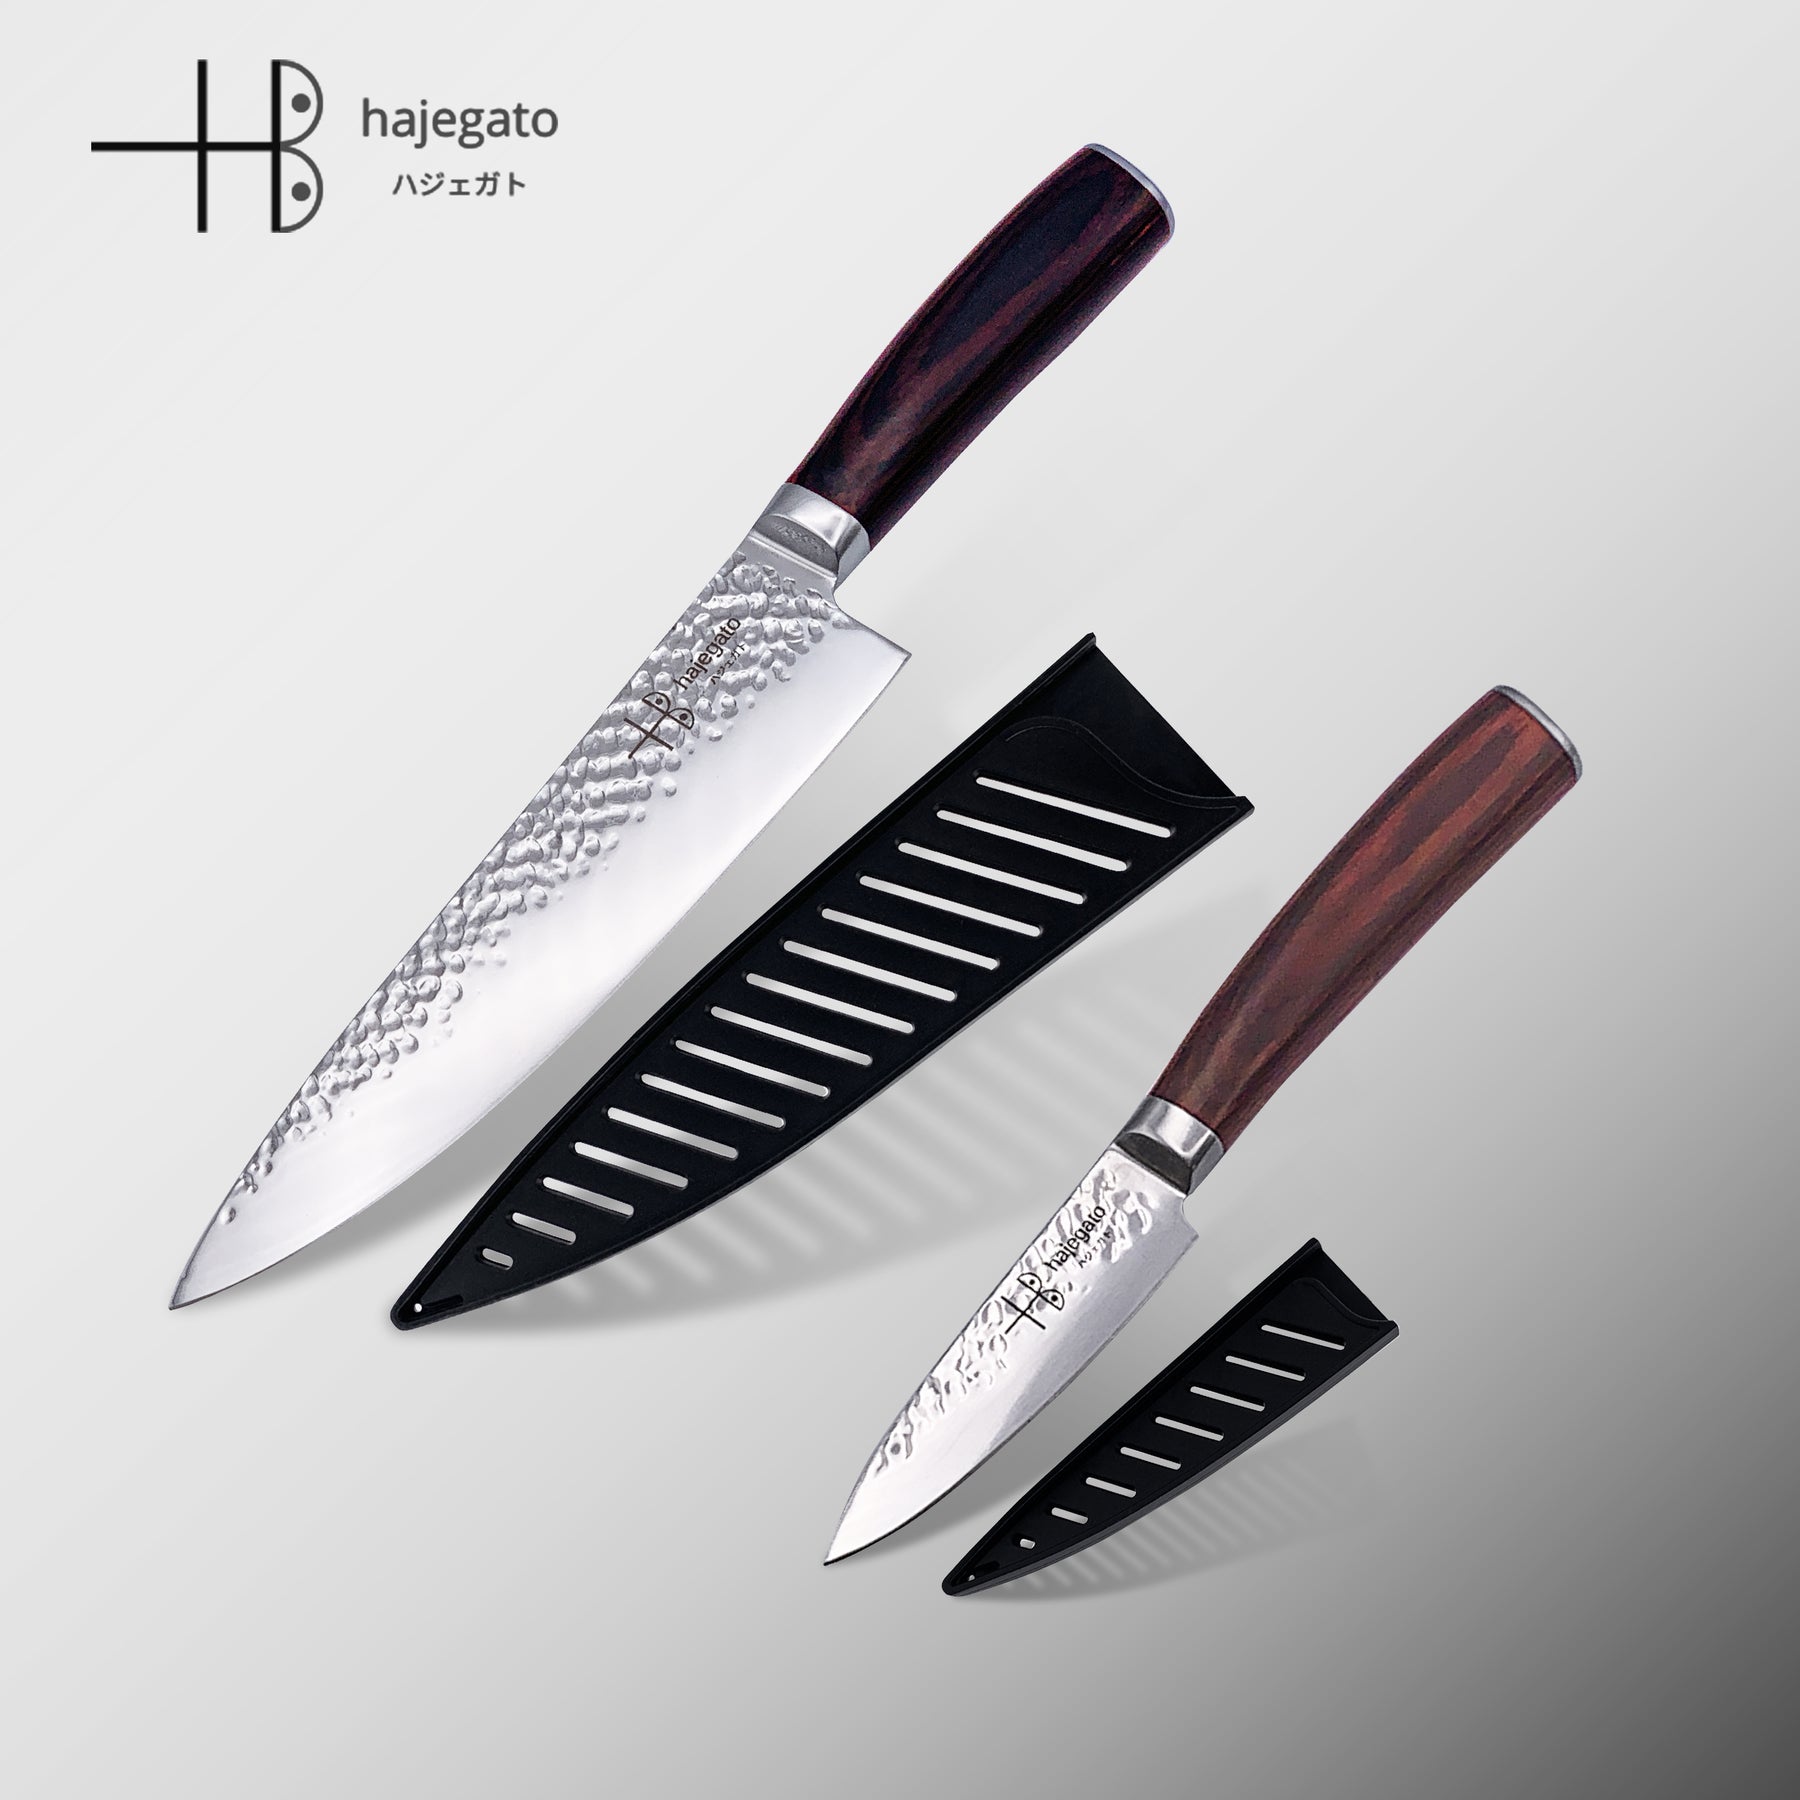 hajegato Damascus Chef Knife Nakiri Unique Handle Professional 7 inch Japanese Chefs Kitchen Knife VG10 67 Layers Damascus Steel Knive with Sheath